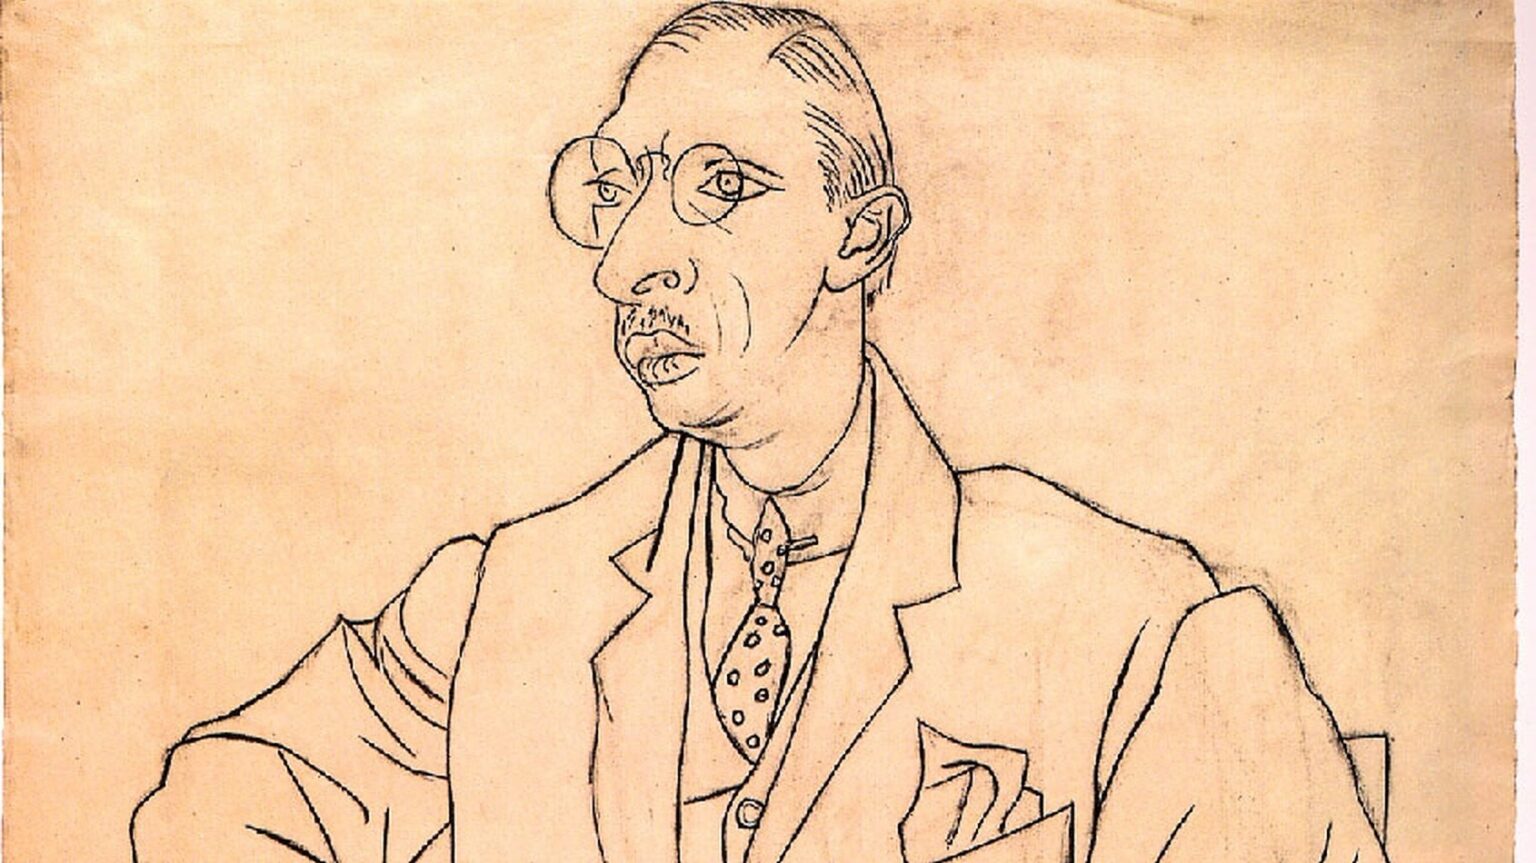 portrait-of-igor-stravinsky-1920-2.v1.cropped-1536x863.jpg